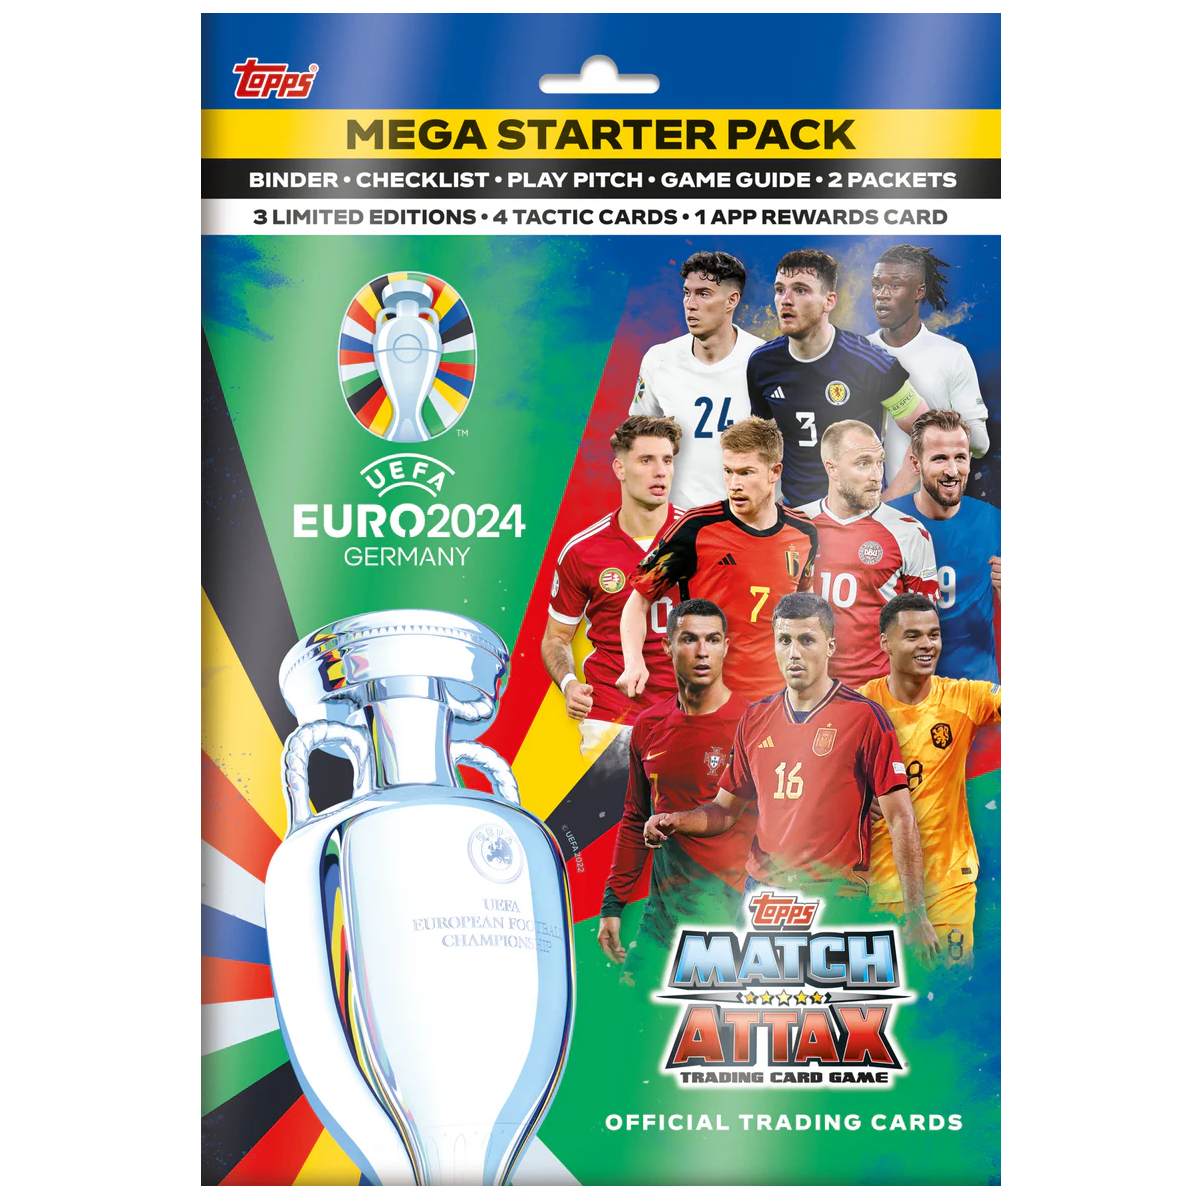 UEFA EURO 2024 Mega Starter Pack